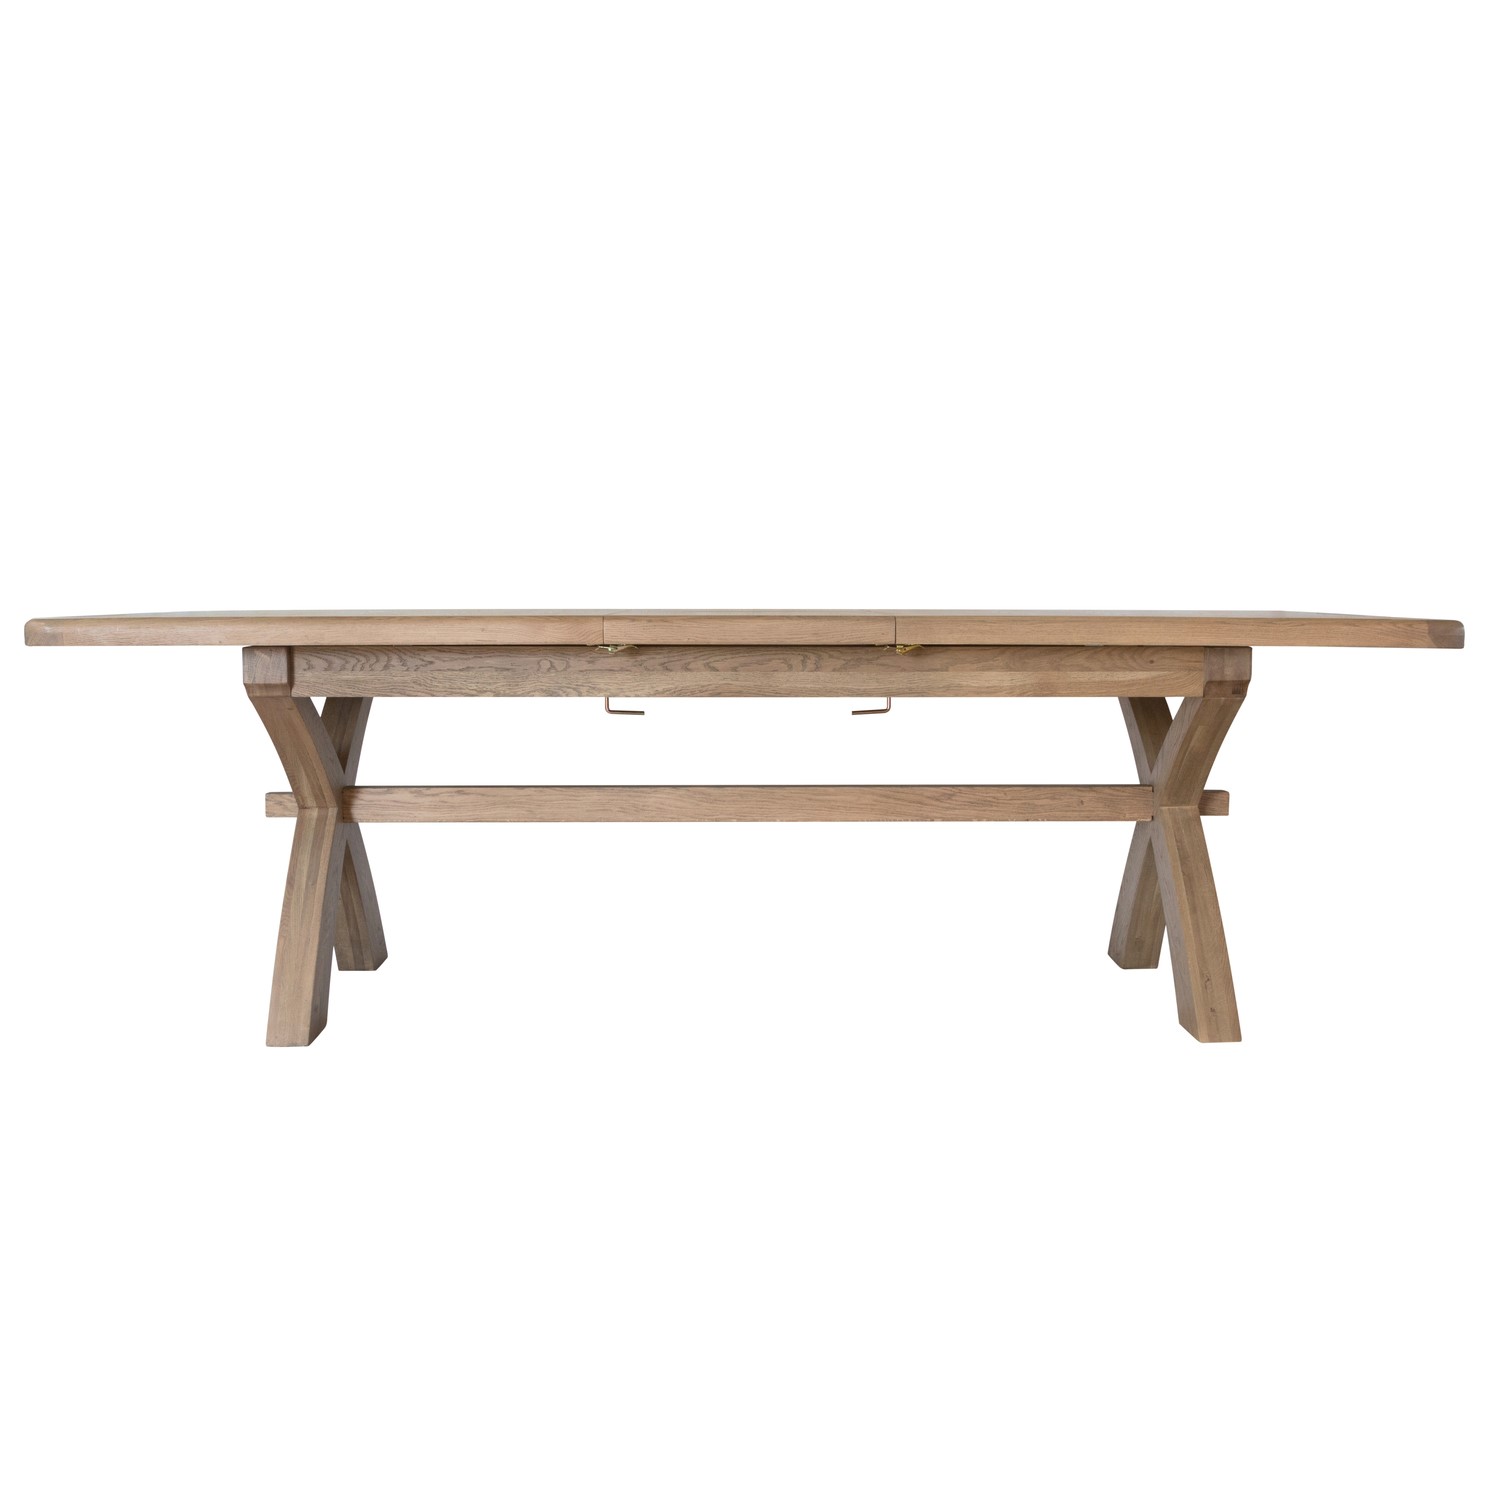 Photo of Extendable oak refectory table - seats 10 - wickerman